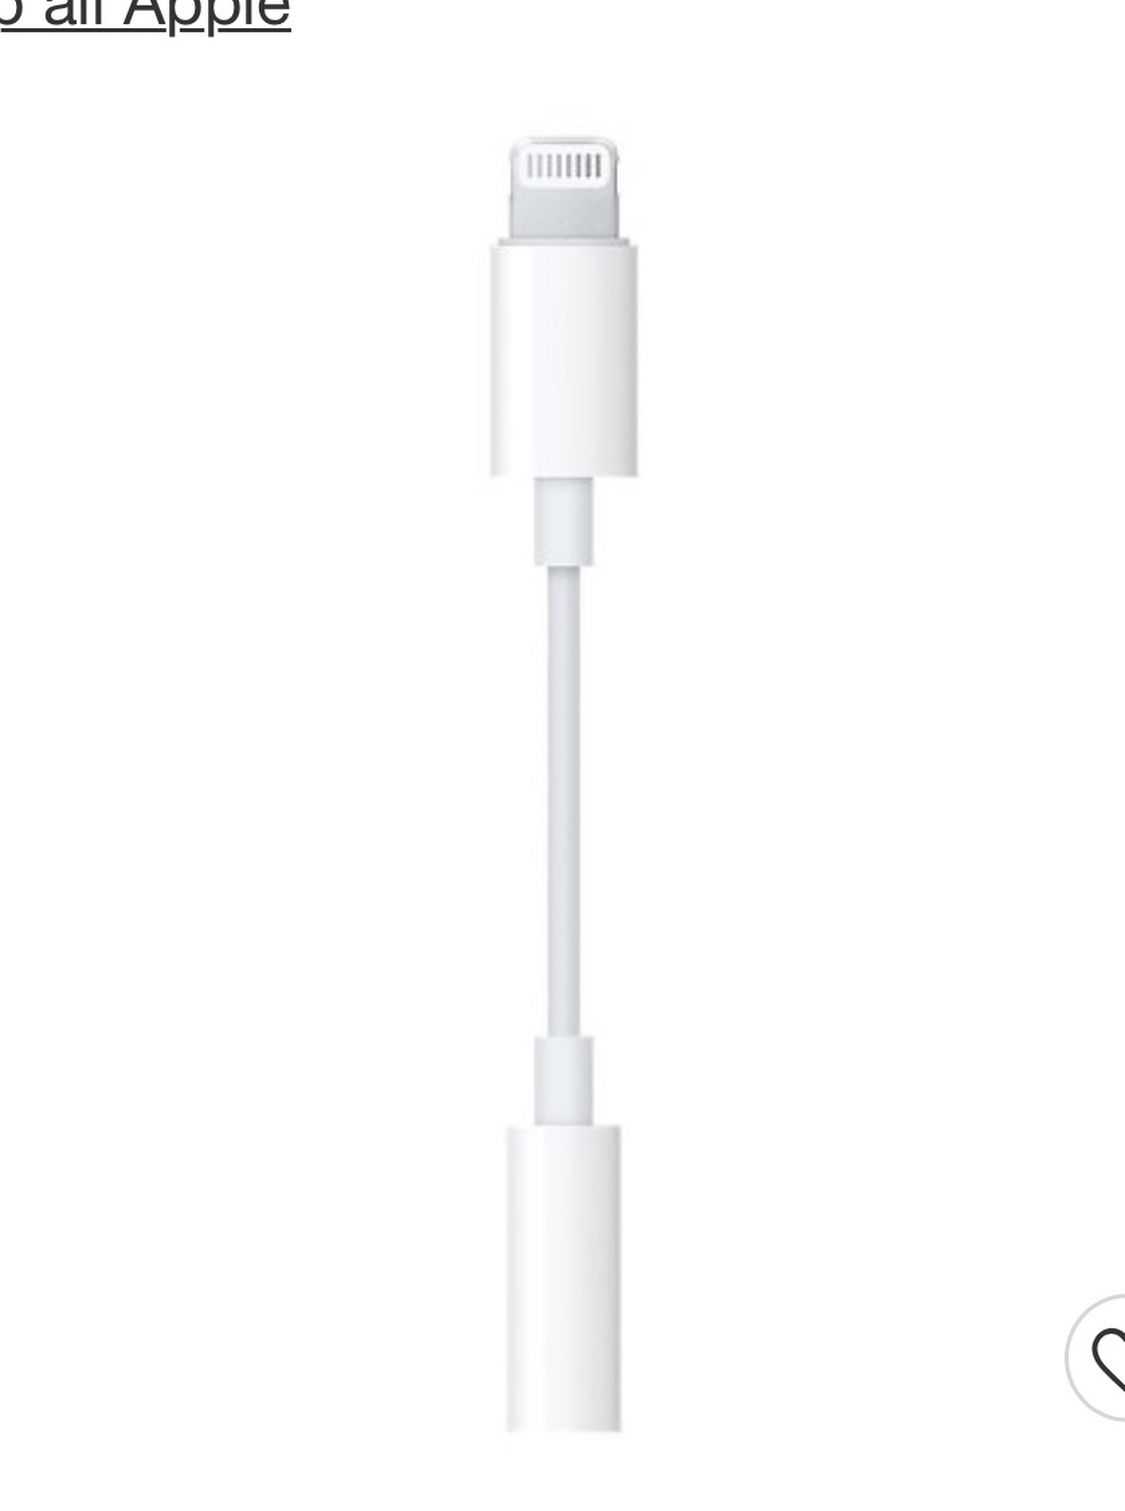 Apple Lightening To 3.5mm Headphone Adapter